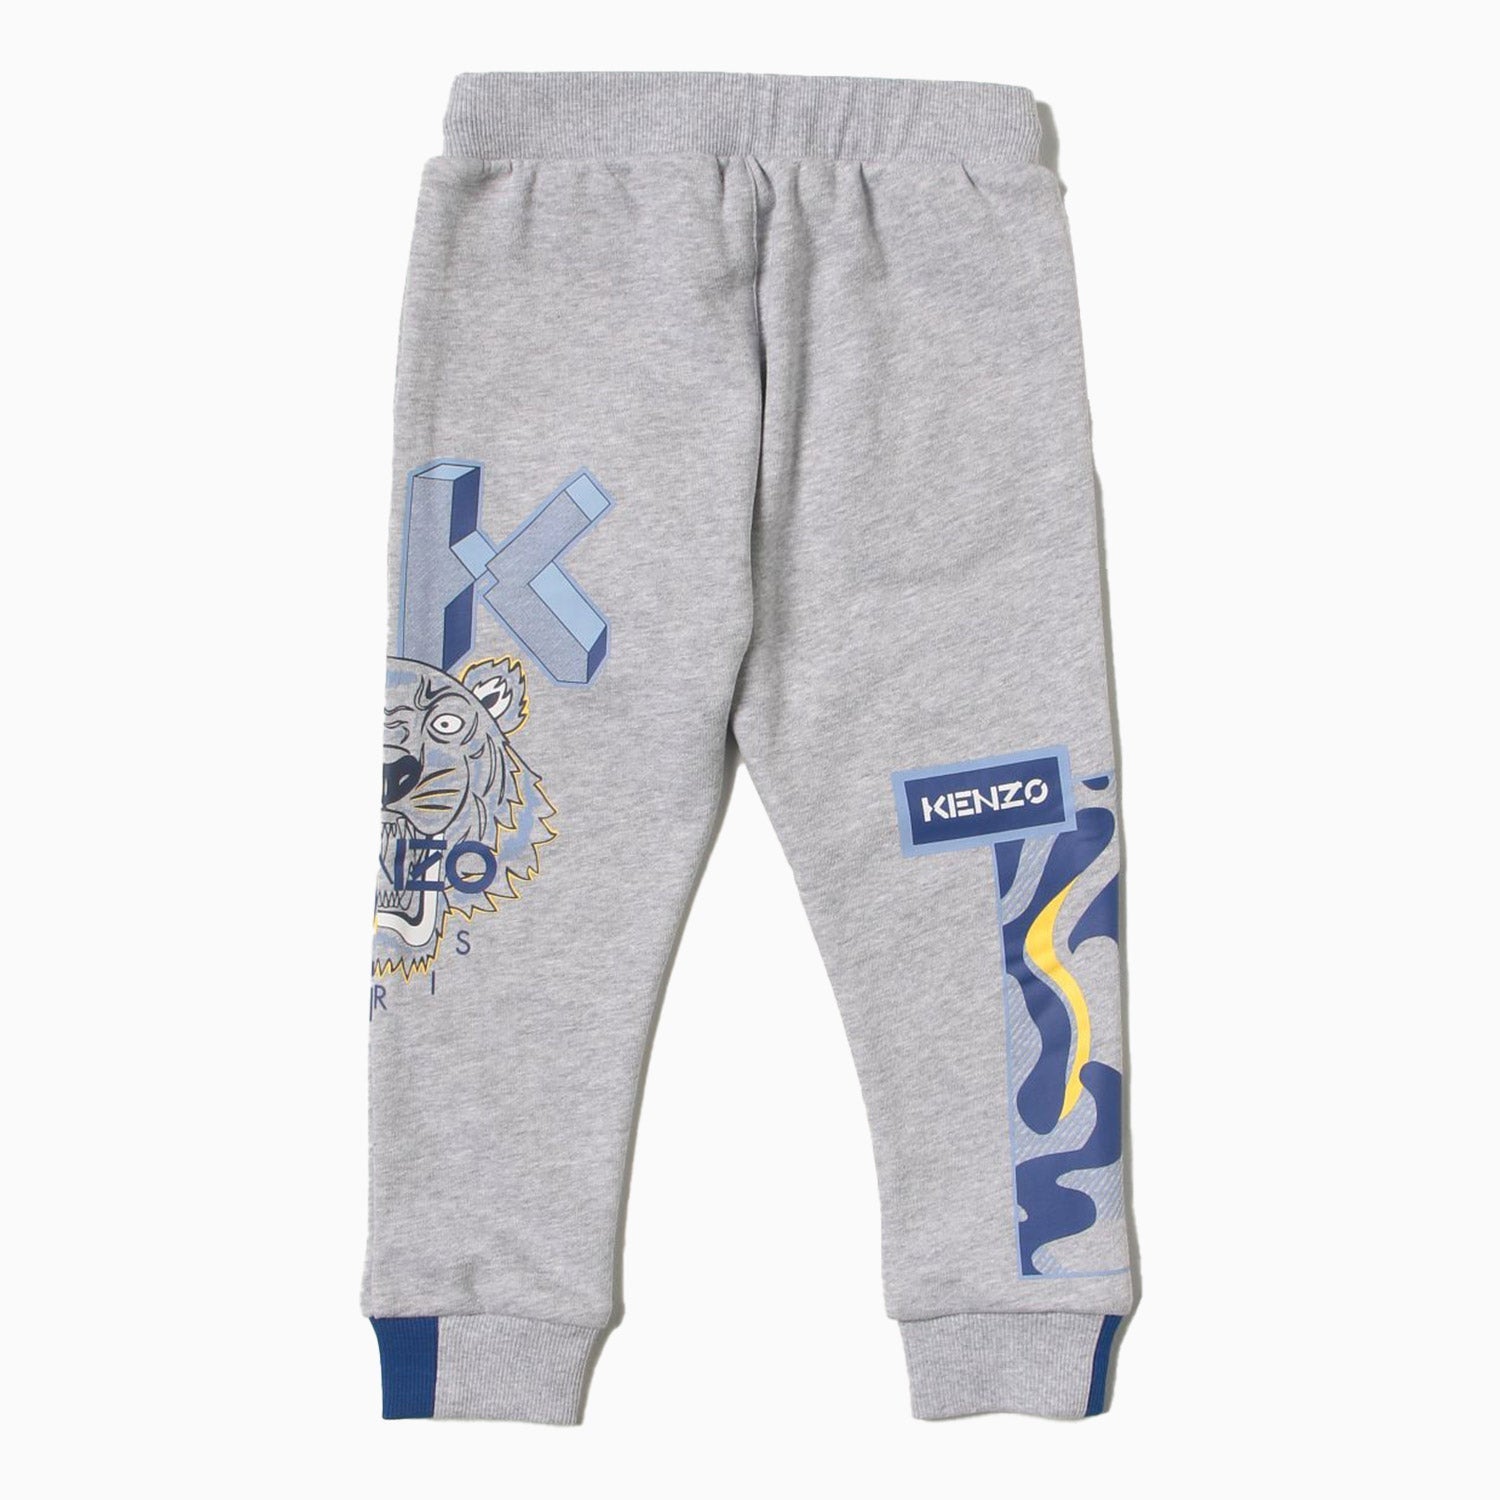 Kenzo Kid's Animal Print Outfit - Color: Grey Marl - Kids Premium Clothing -